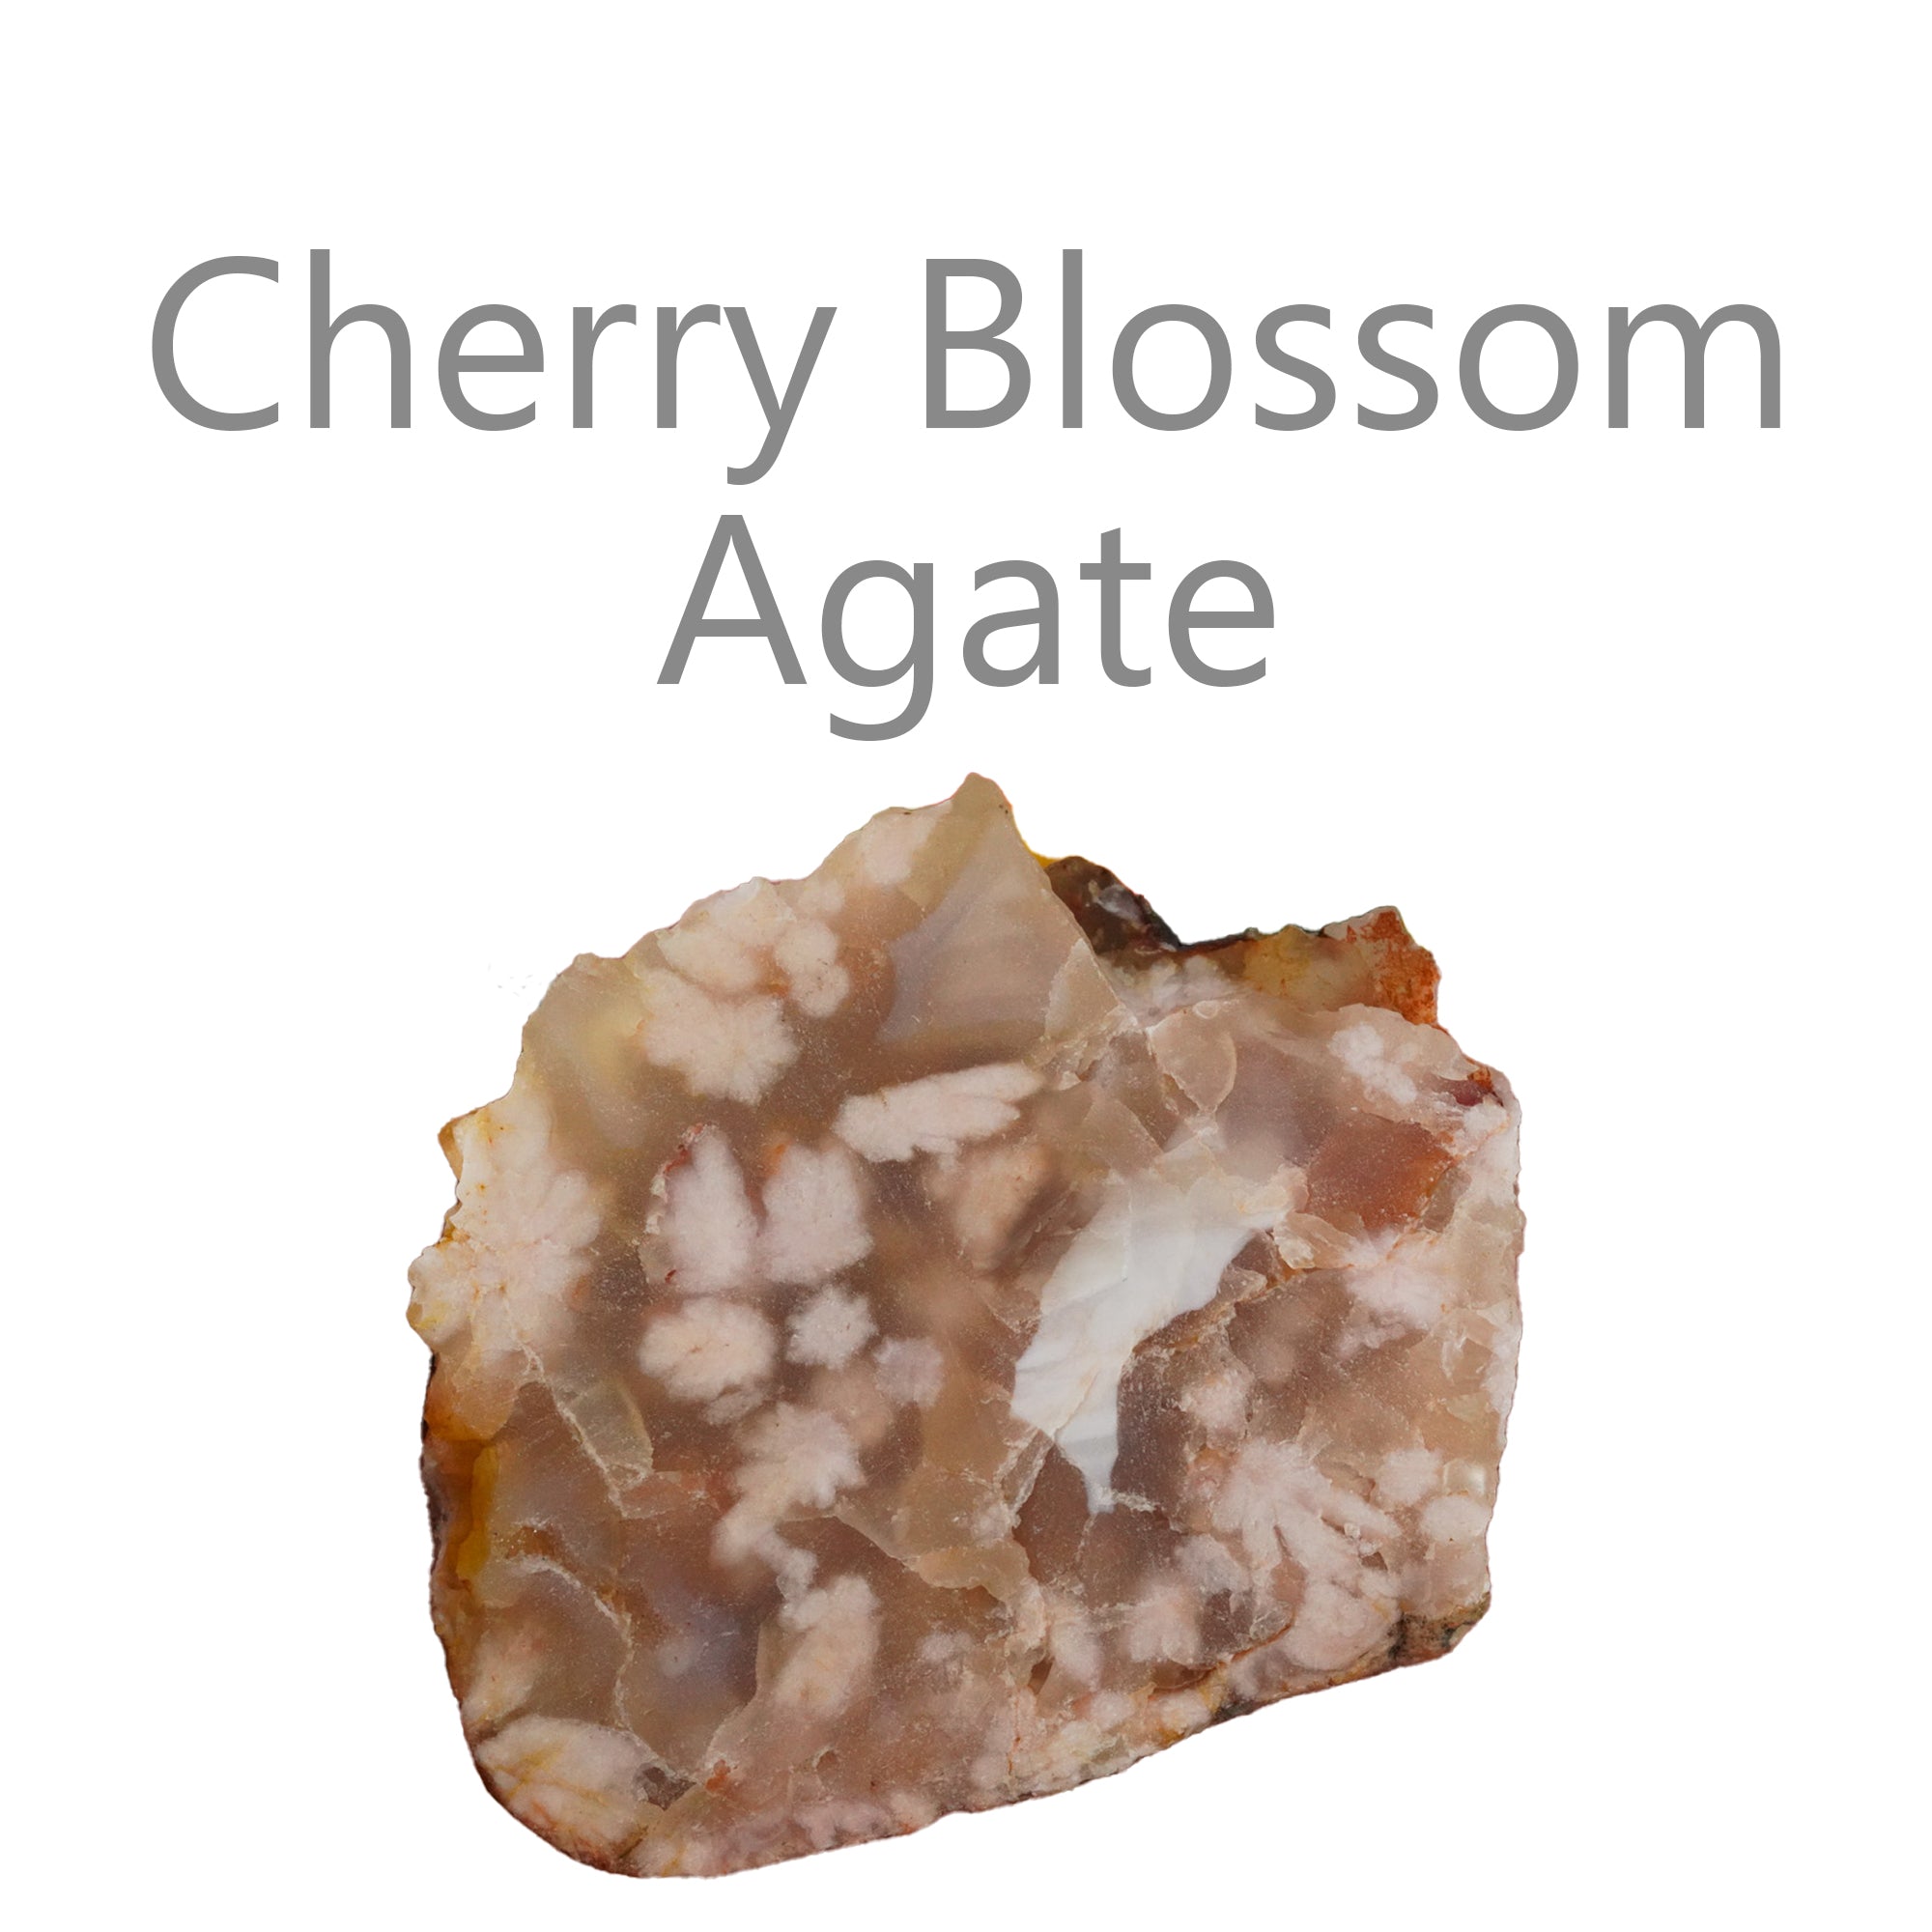 Cherry Blossom Agate